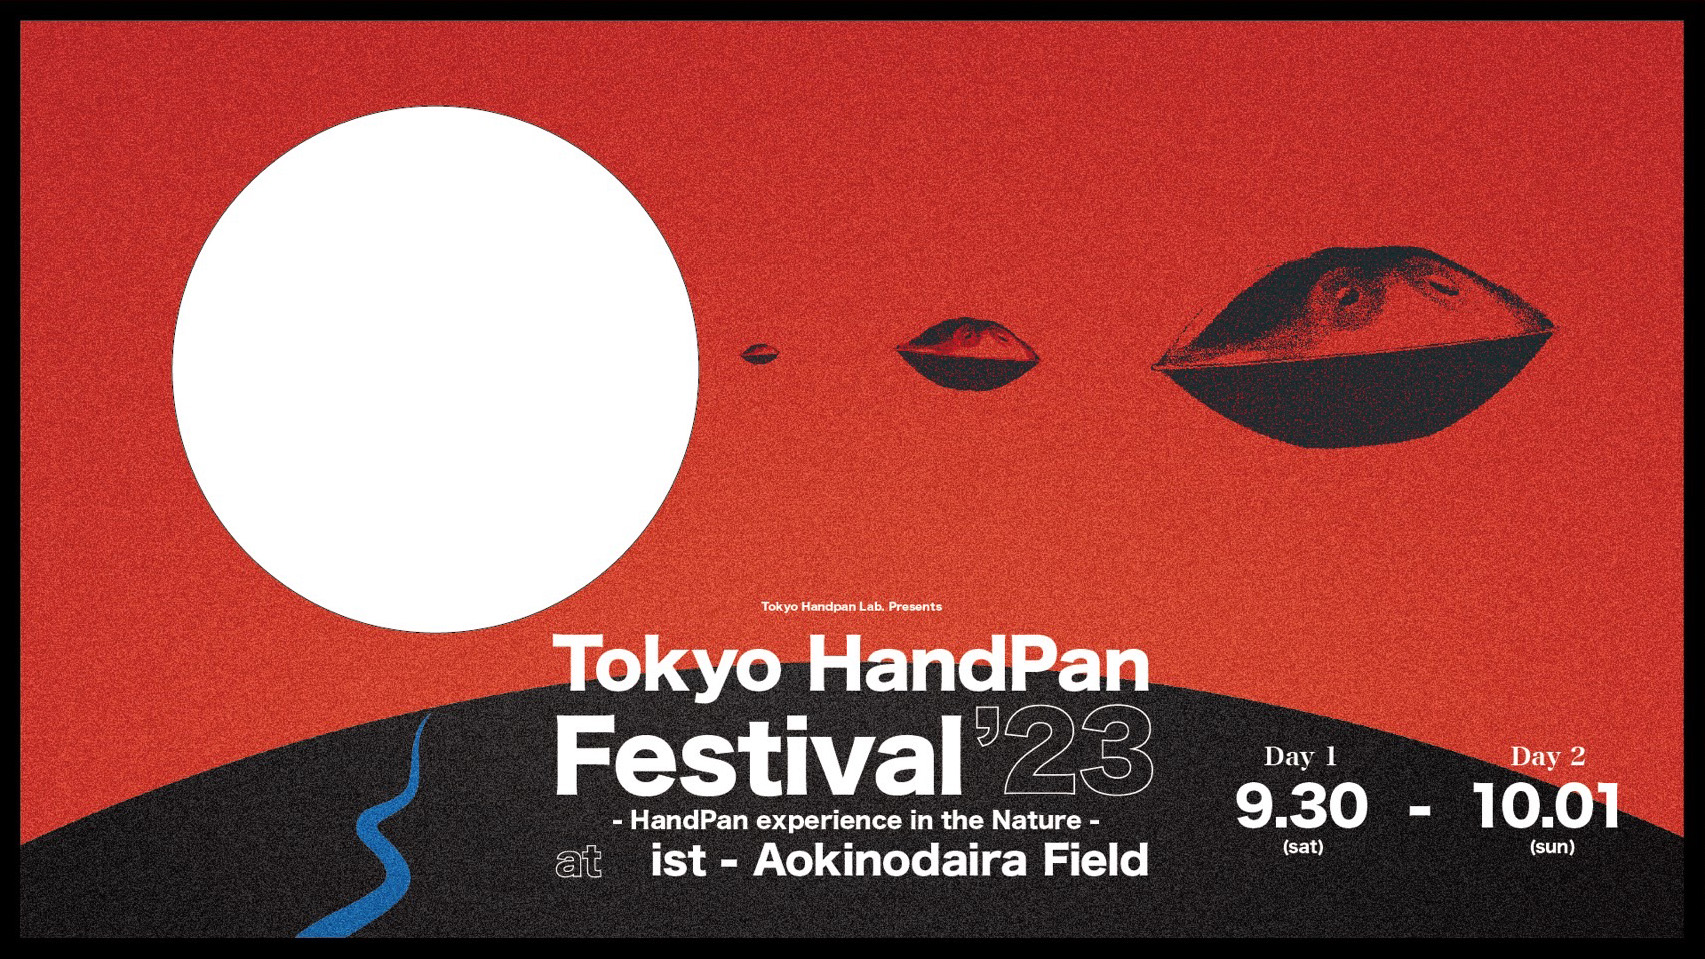 Tokyo HandPan Festival '23